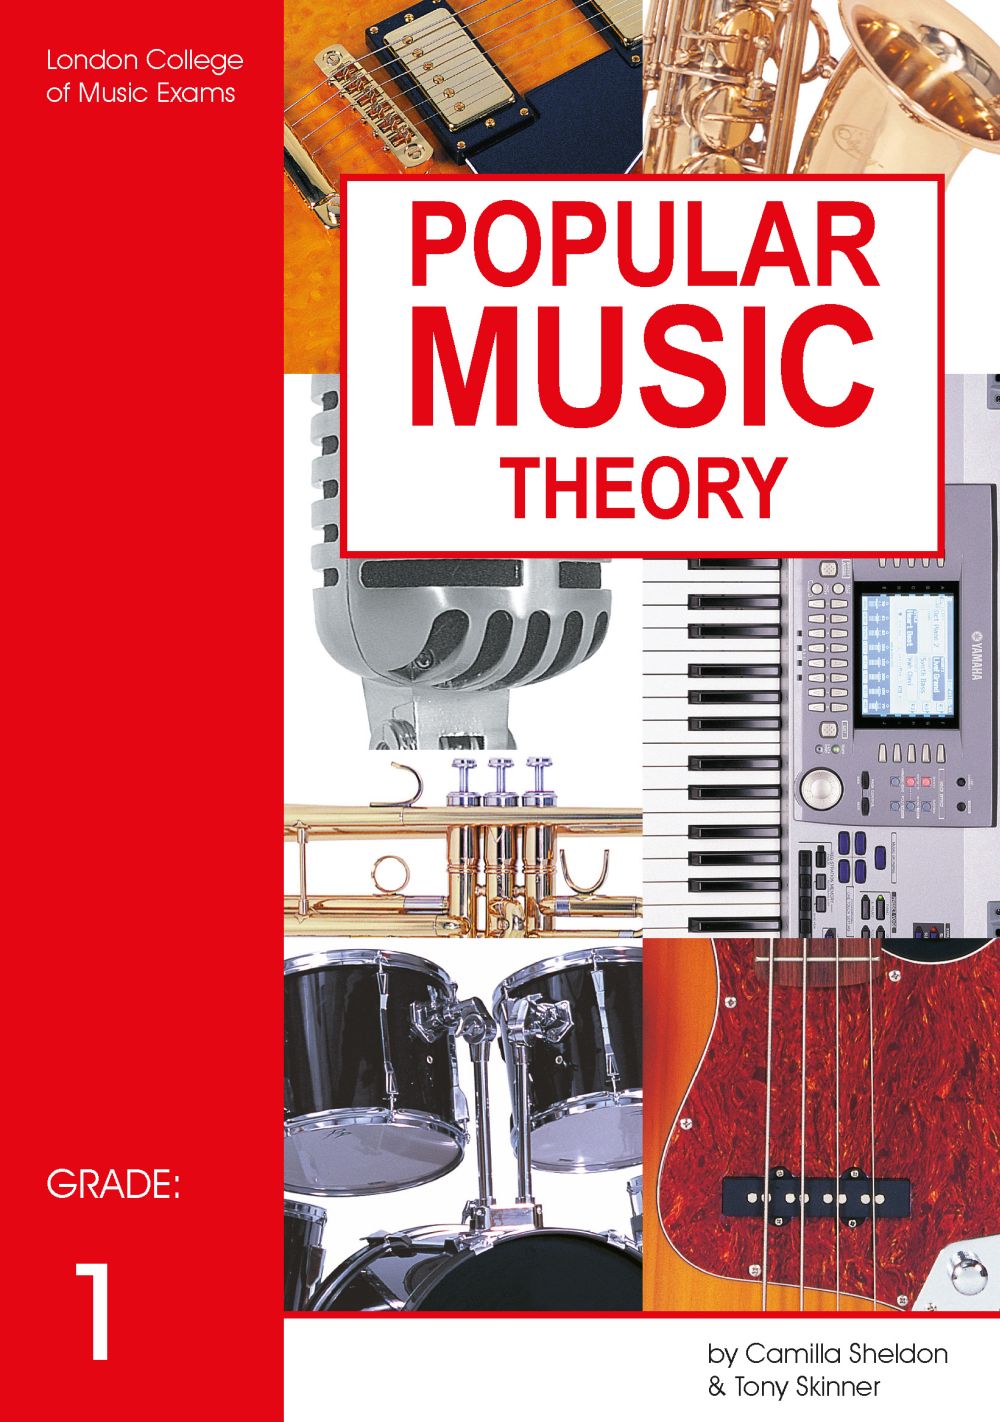 Lcm Popular Music Theory Grade 1 Sheldon Skinner: Theory